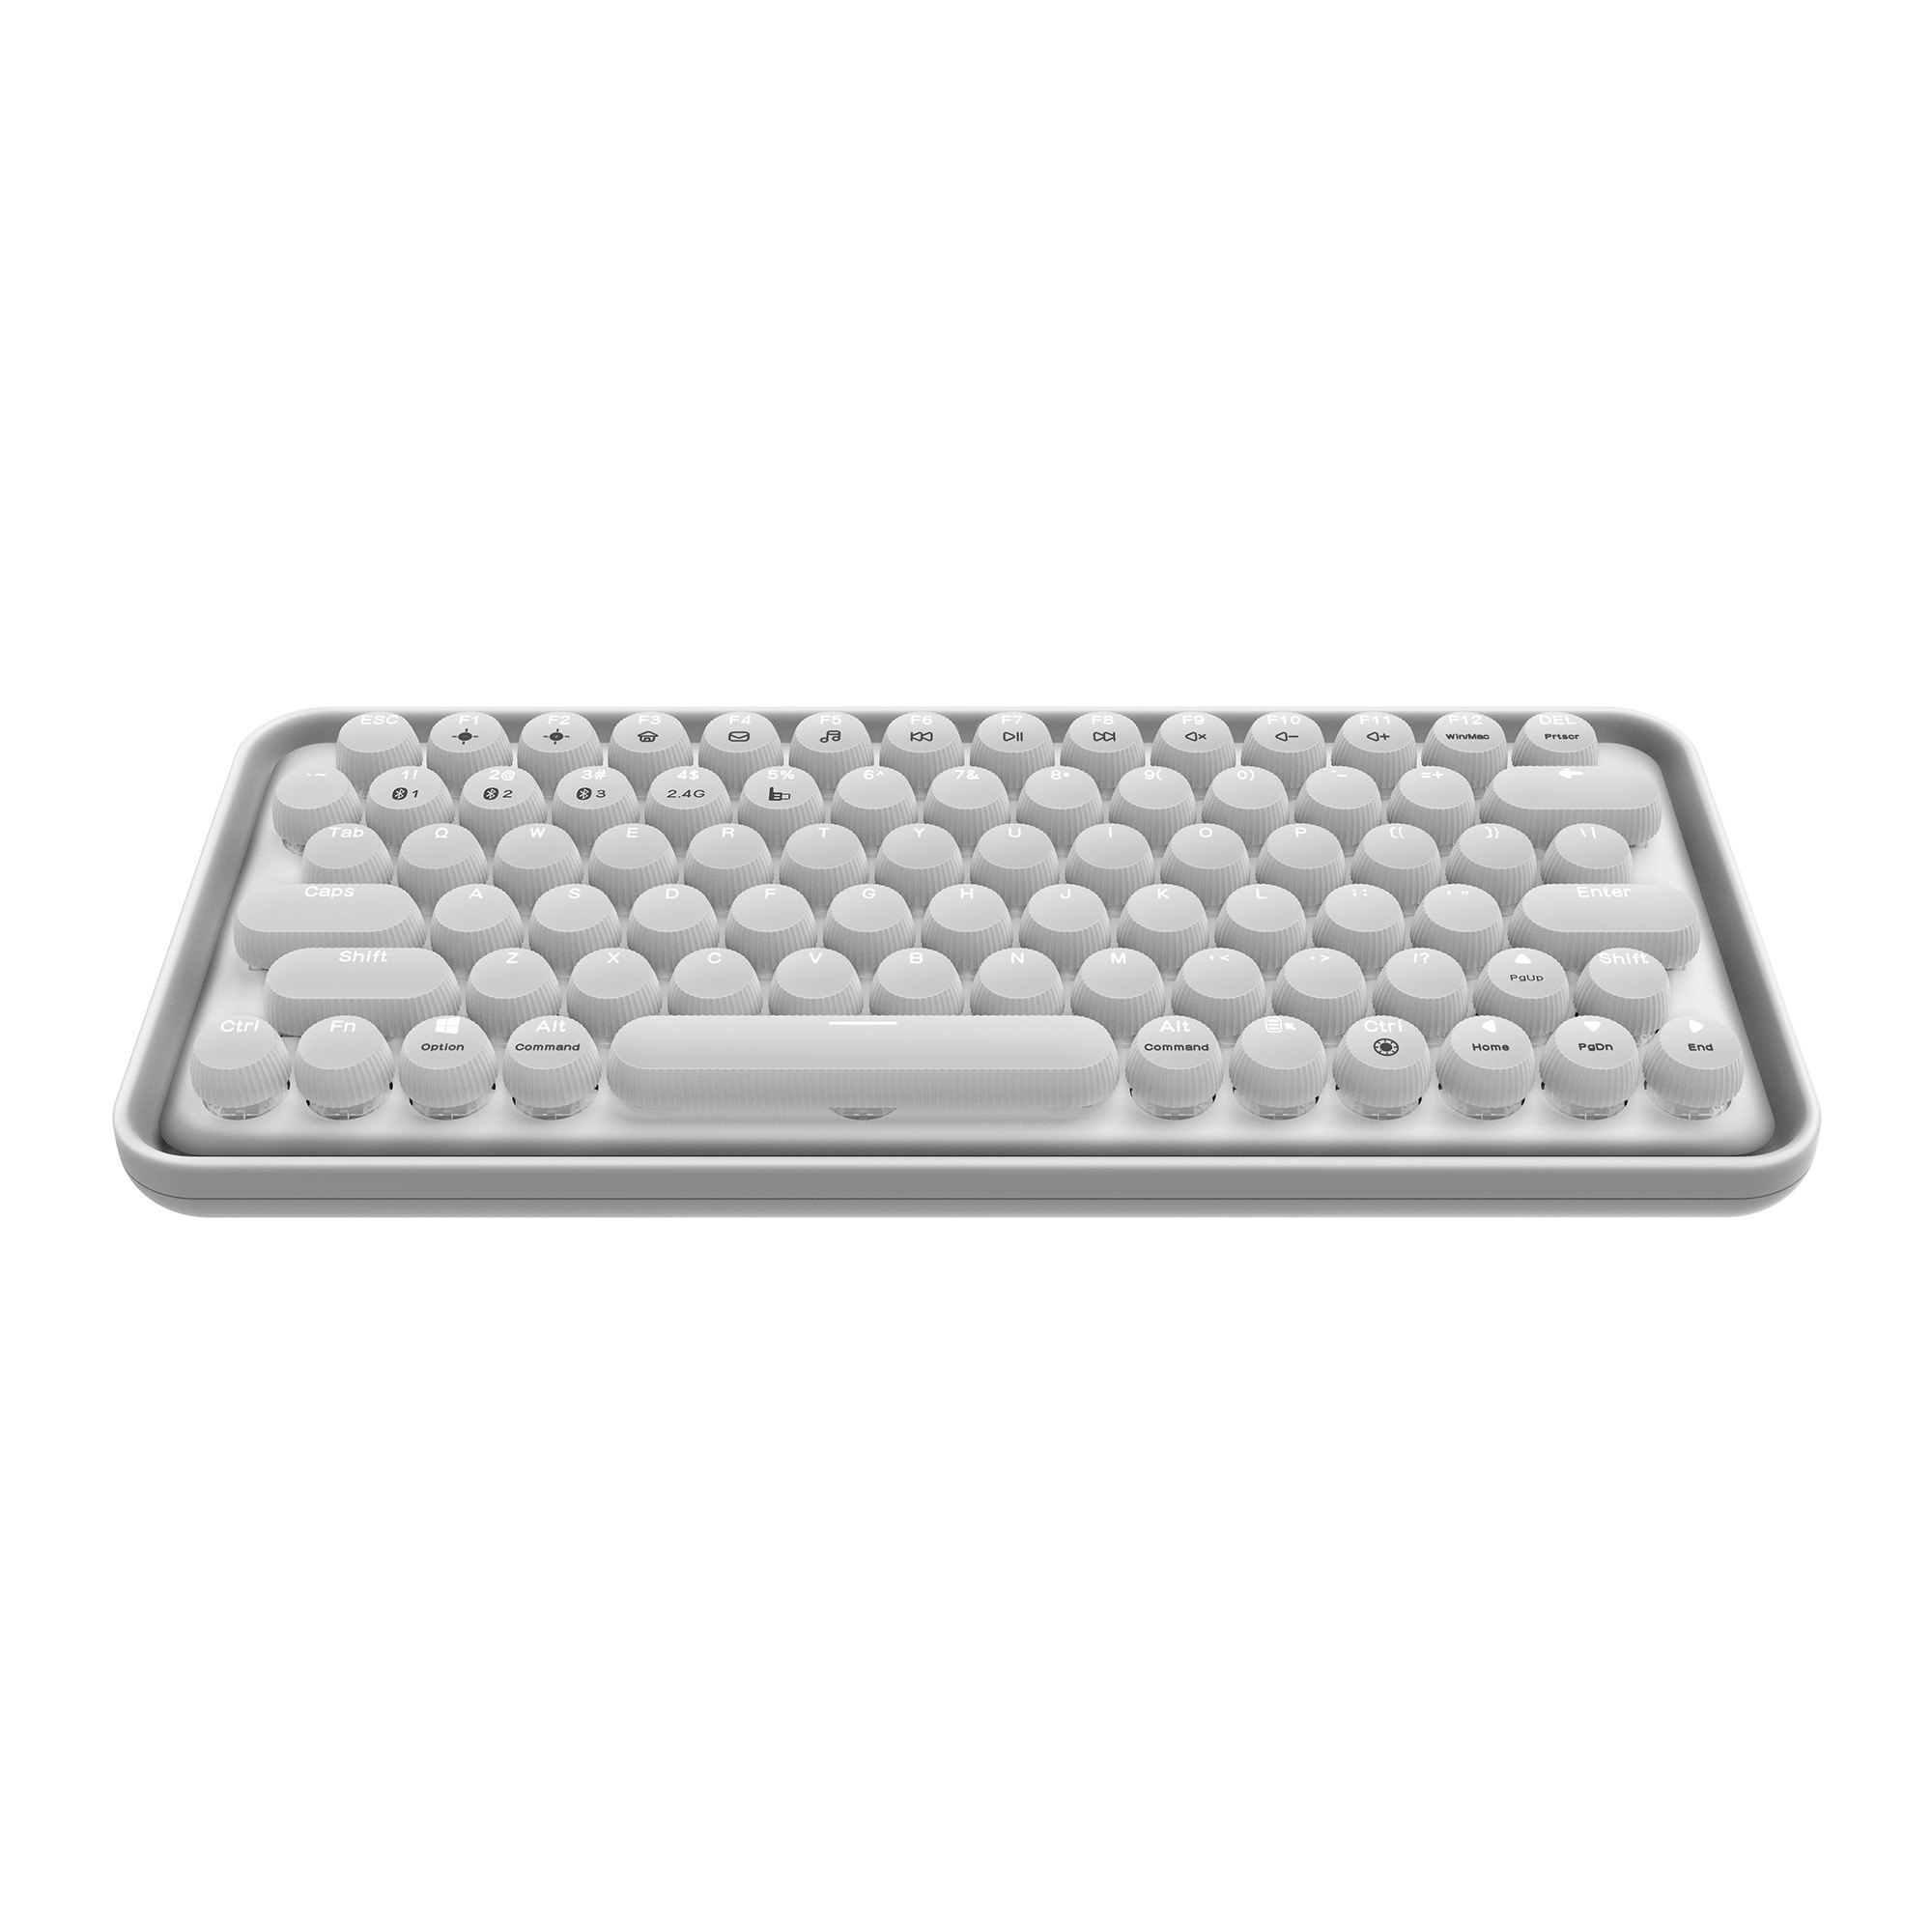 RAPOO Ralemo Pre 5 mech. Keyboard 11567 wireless, White-Silver